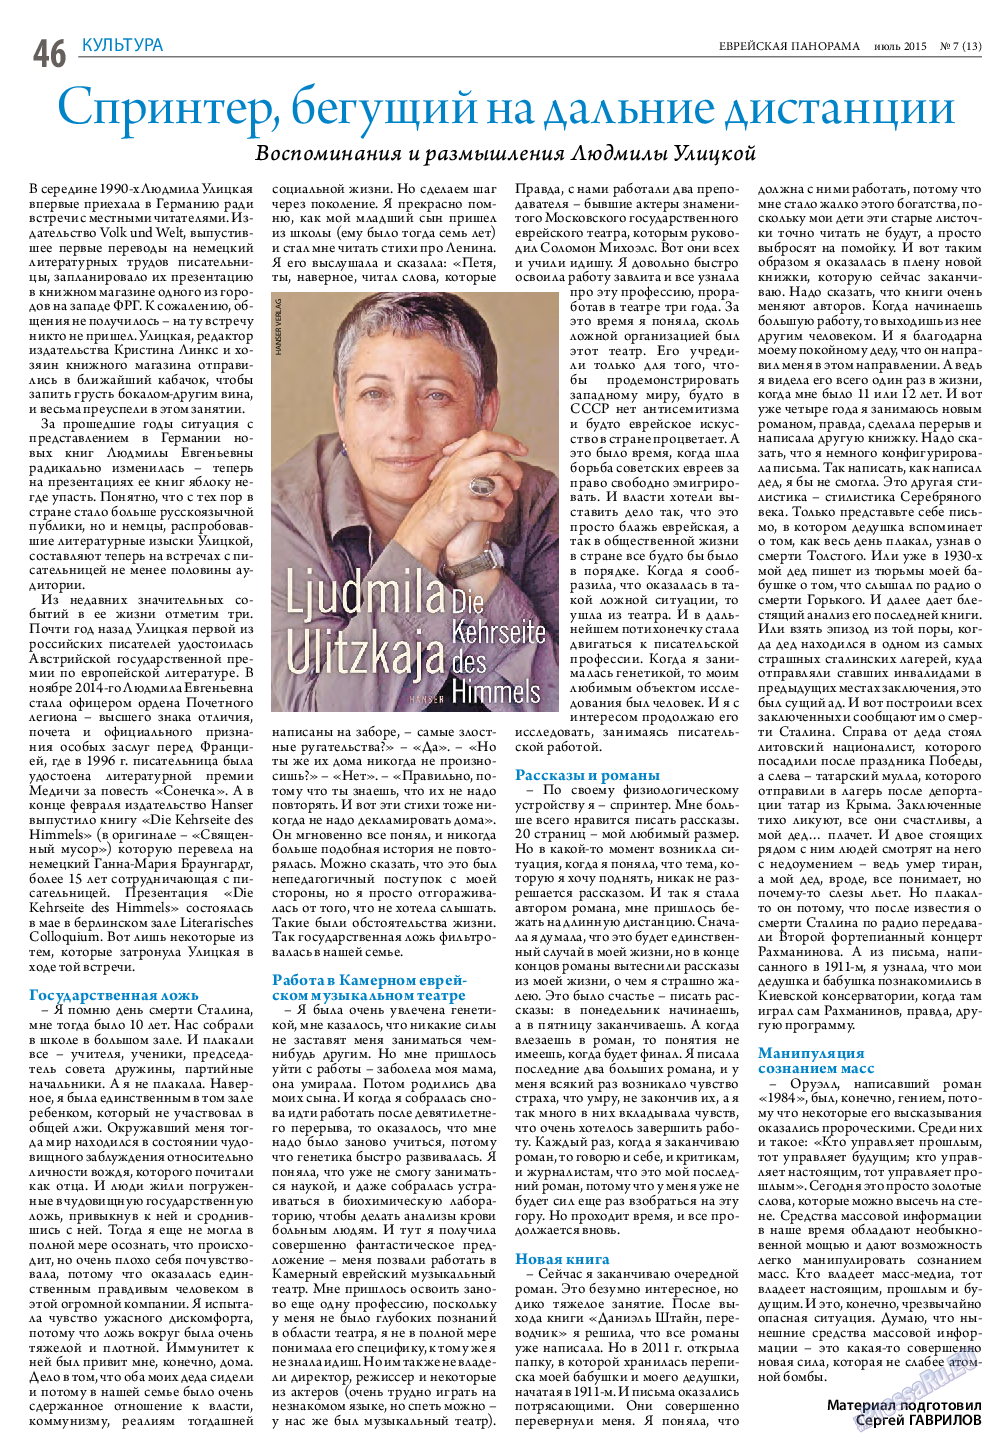 Еврейская панорама, газета. 2015 №7 стр.46